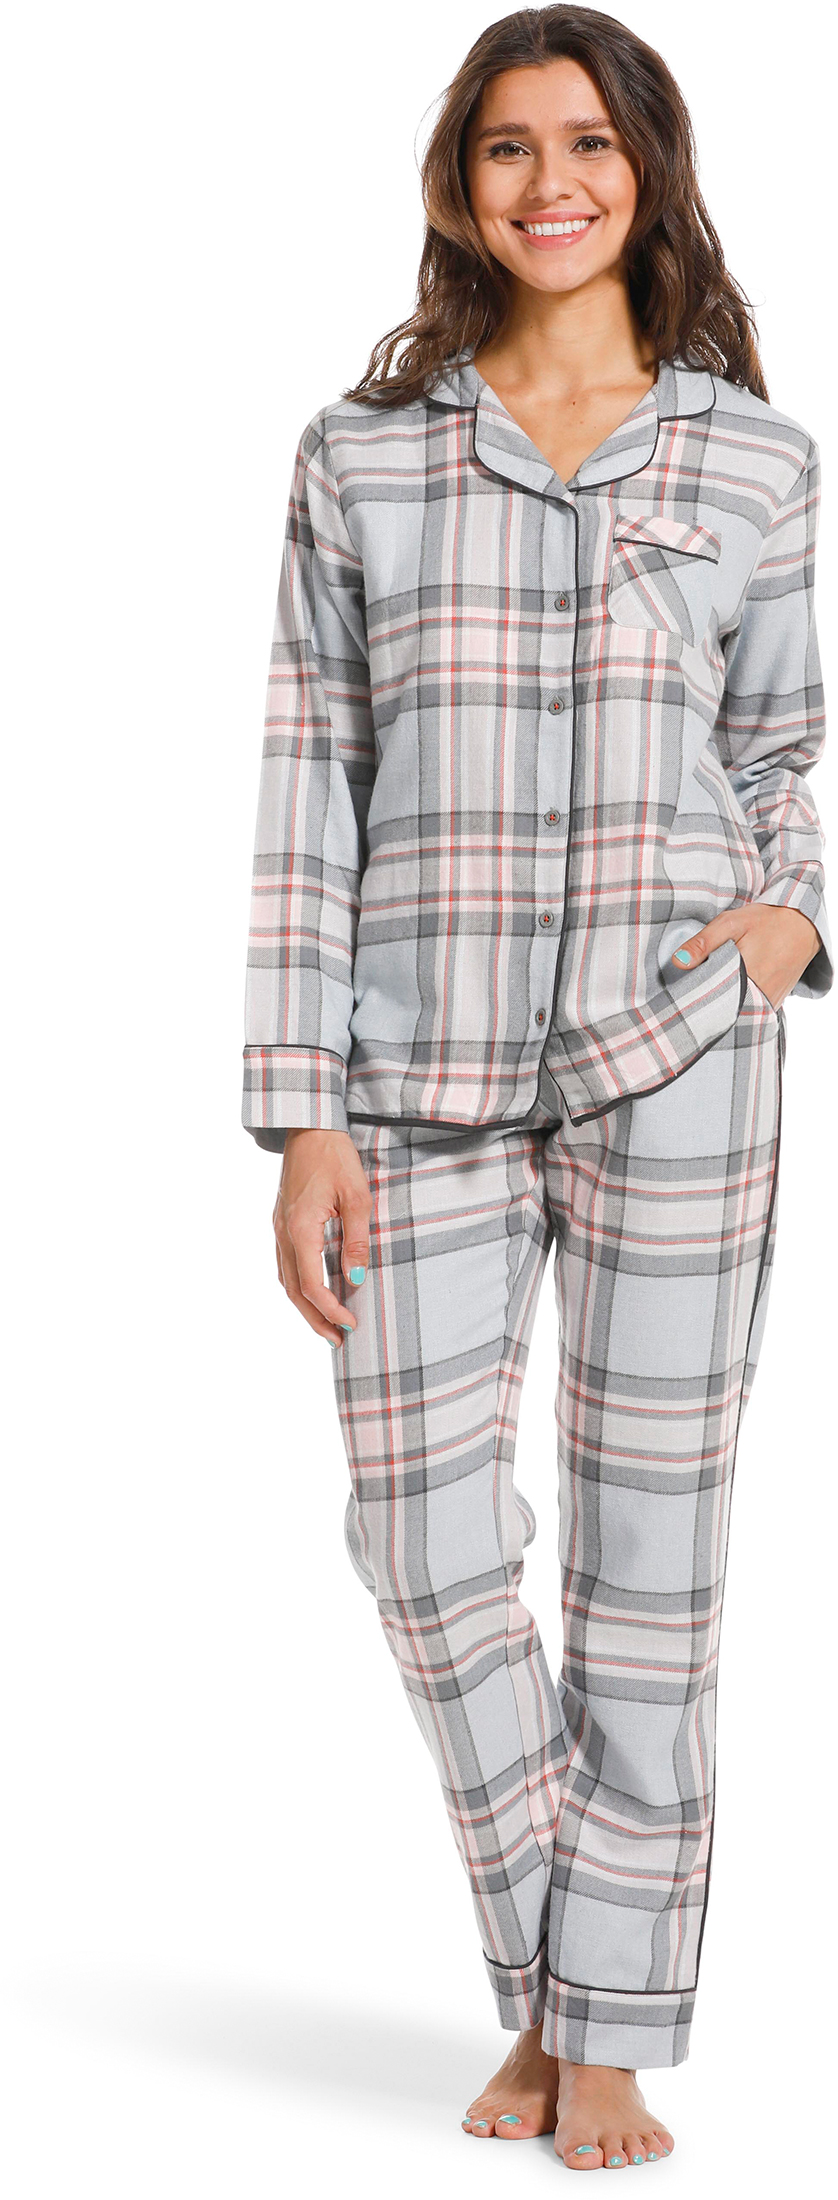 Rebelle dames pyjama flanel 21222-458-6 - Beige - 48